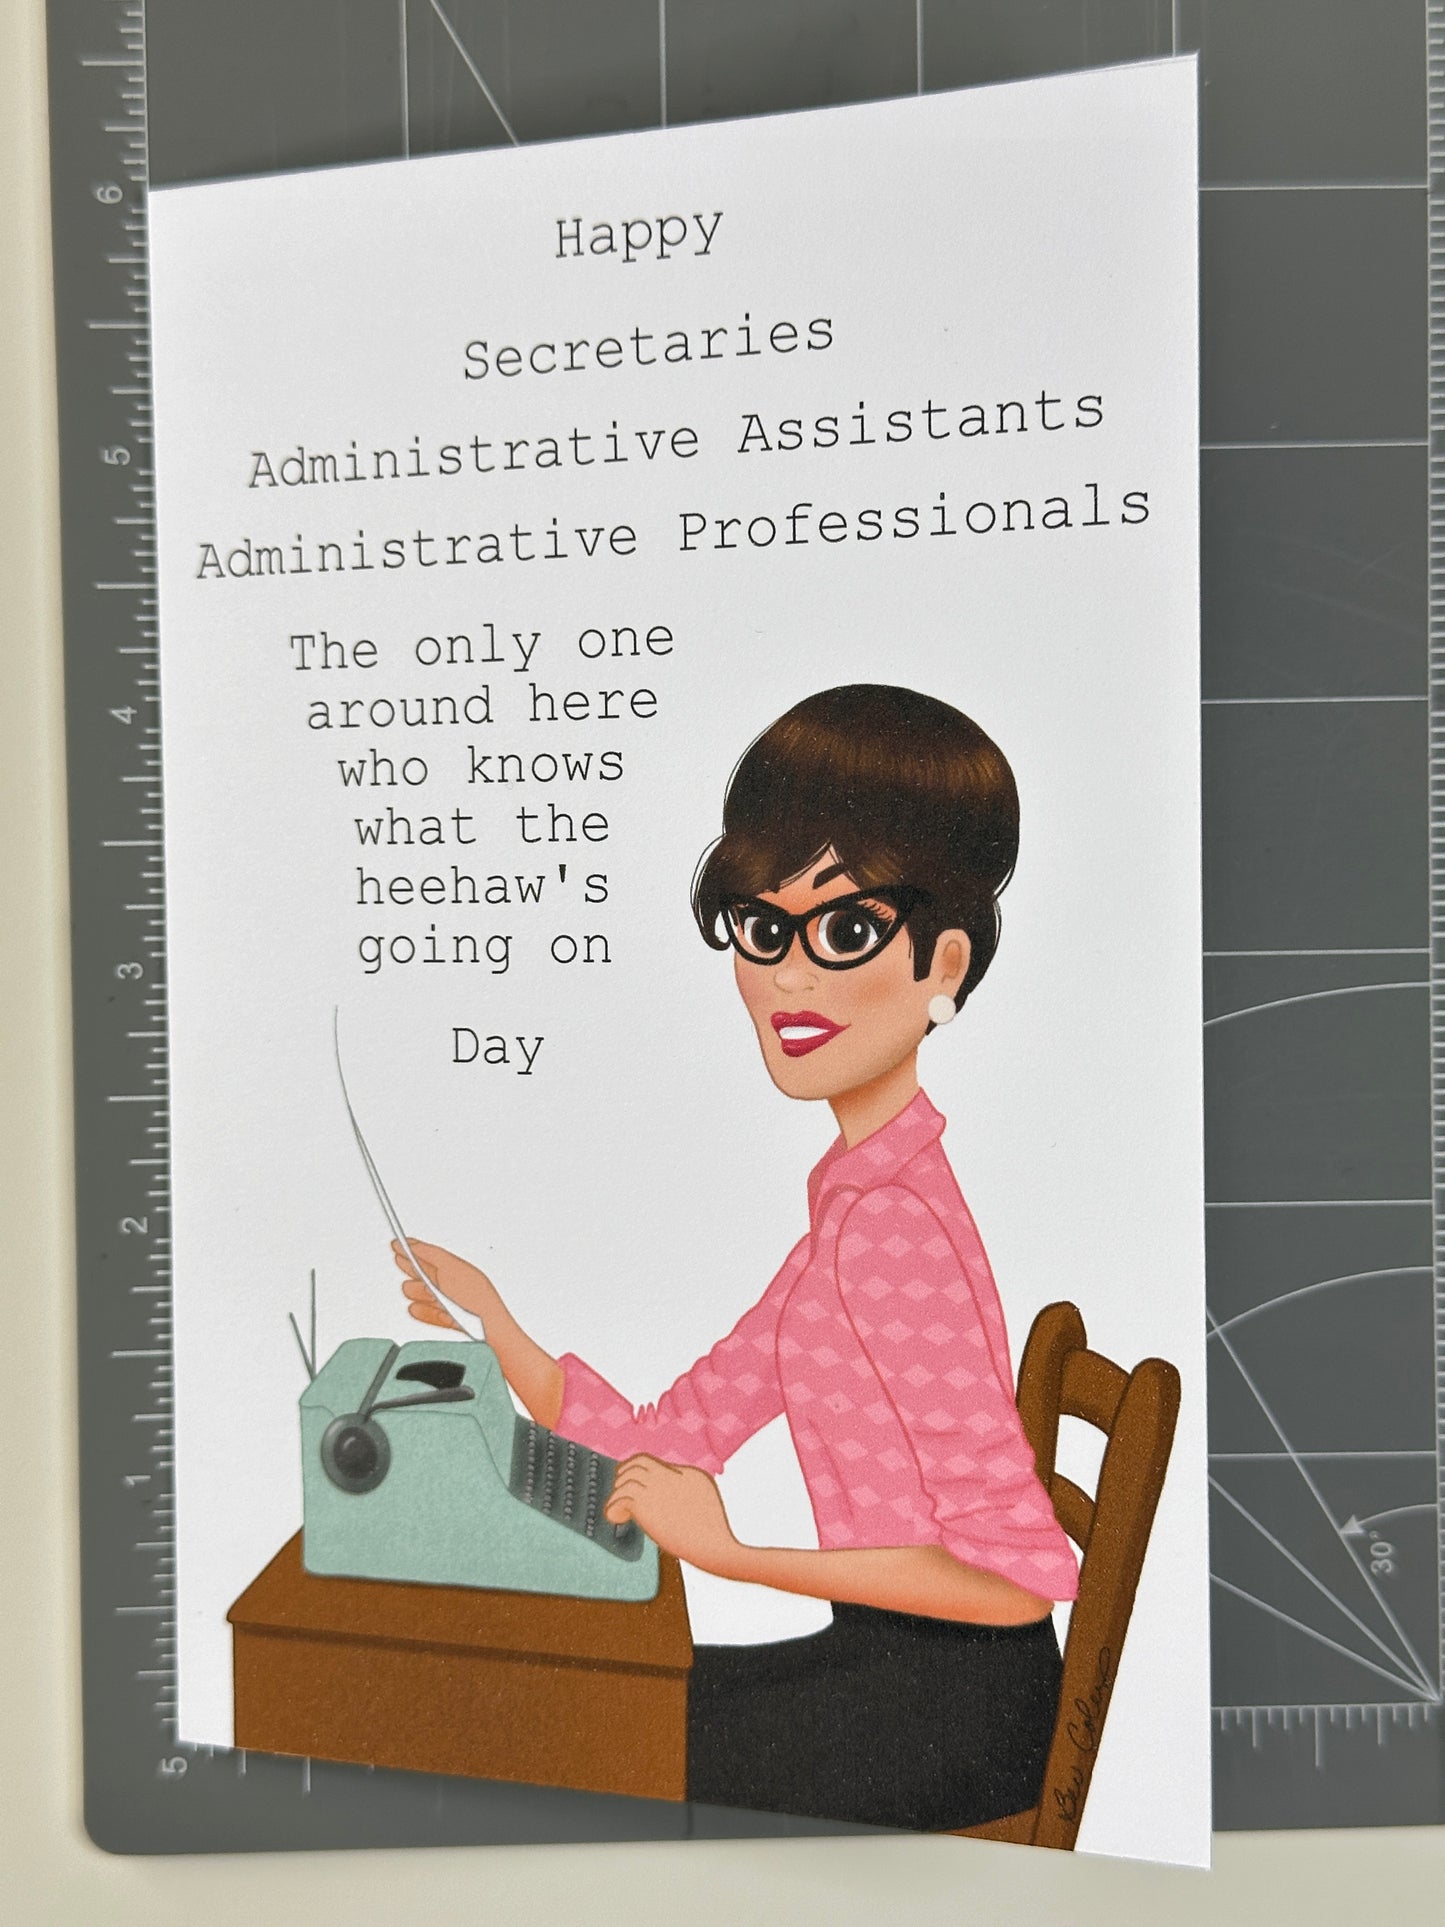 Happy Administrative Professionals Day Greeting Card - Medium Skin Tone